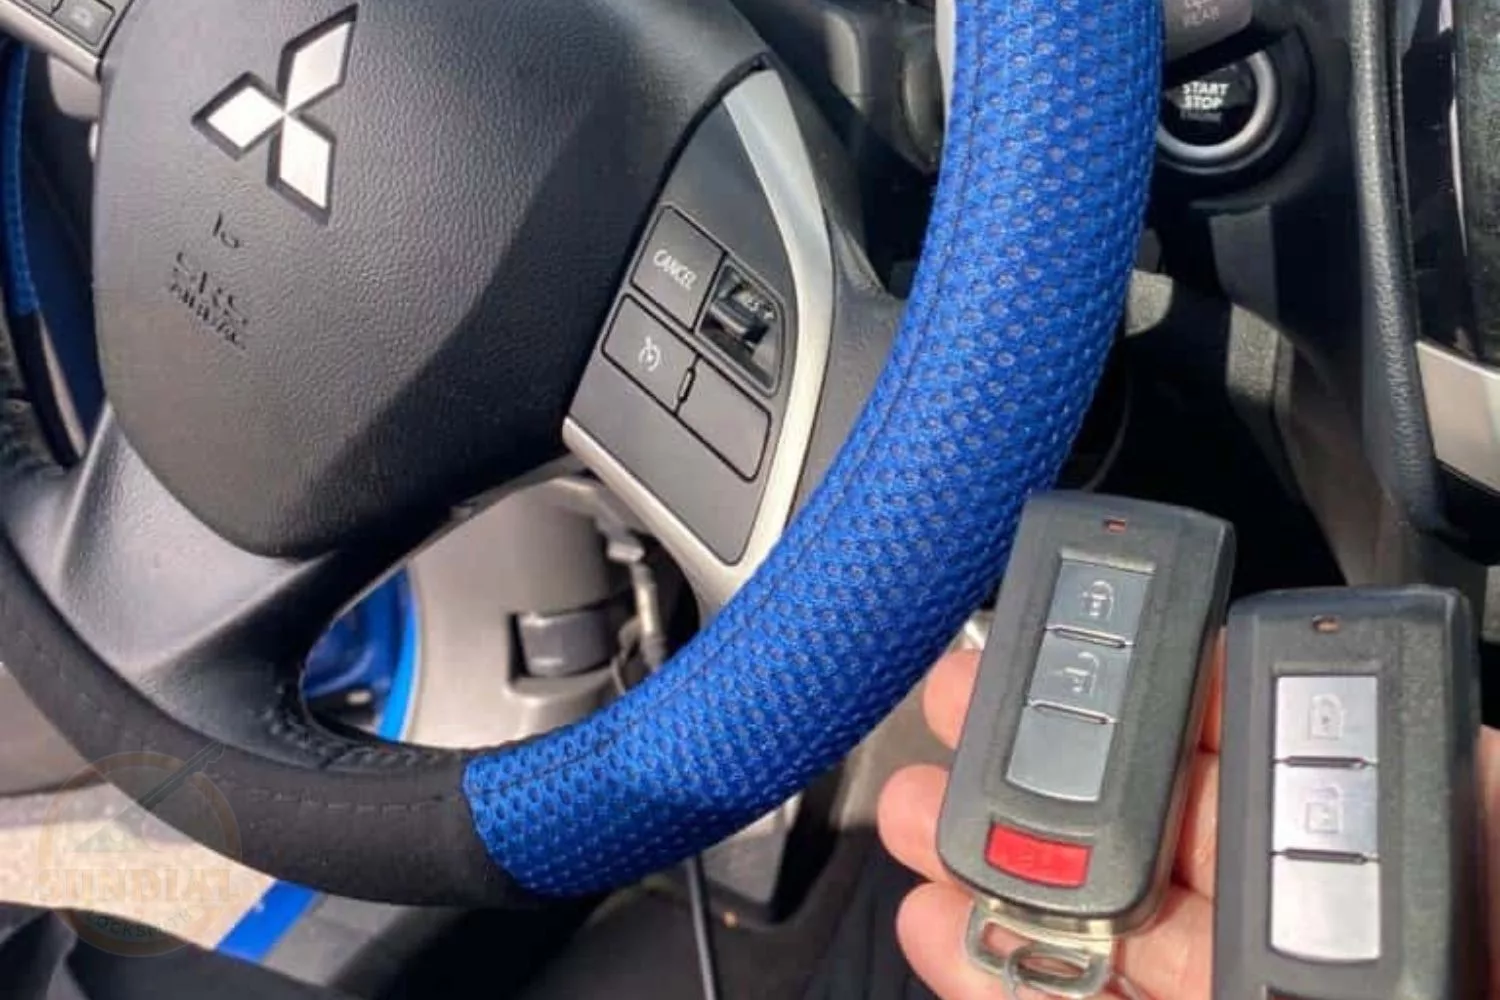 Mitsubishi car steering wheel and key fobs